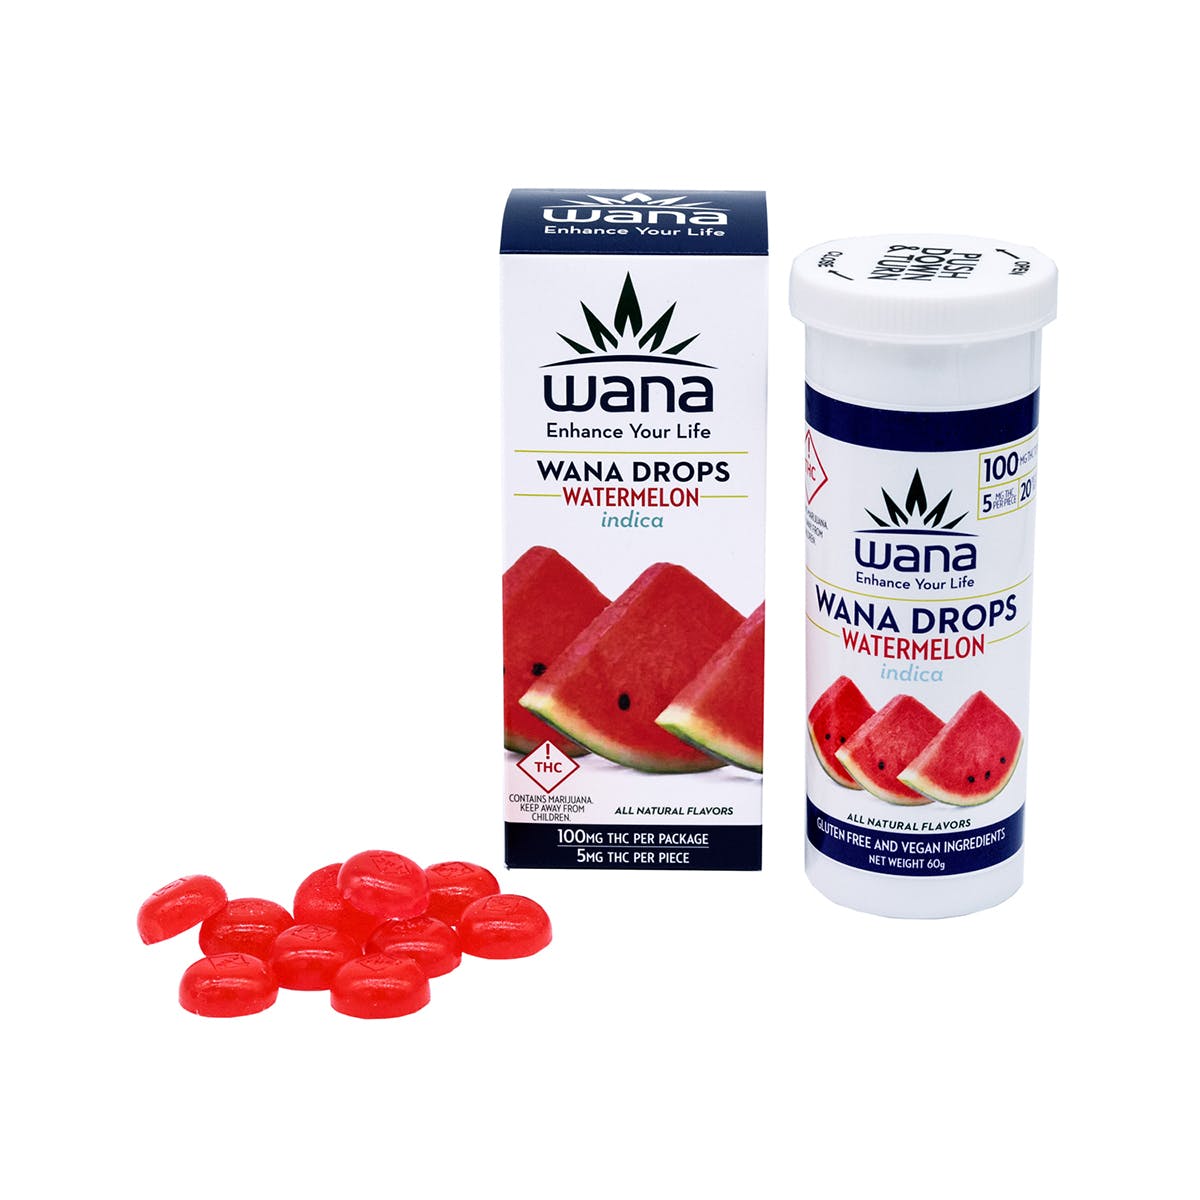 edible-wana-edibles-watermelon-drops-100mg-indica